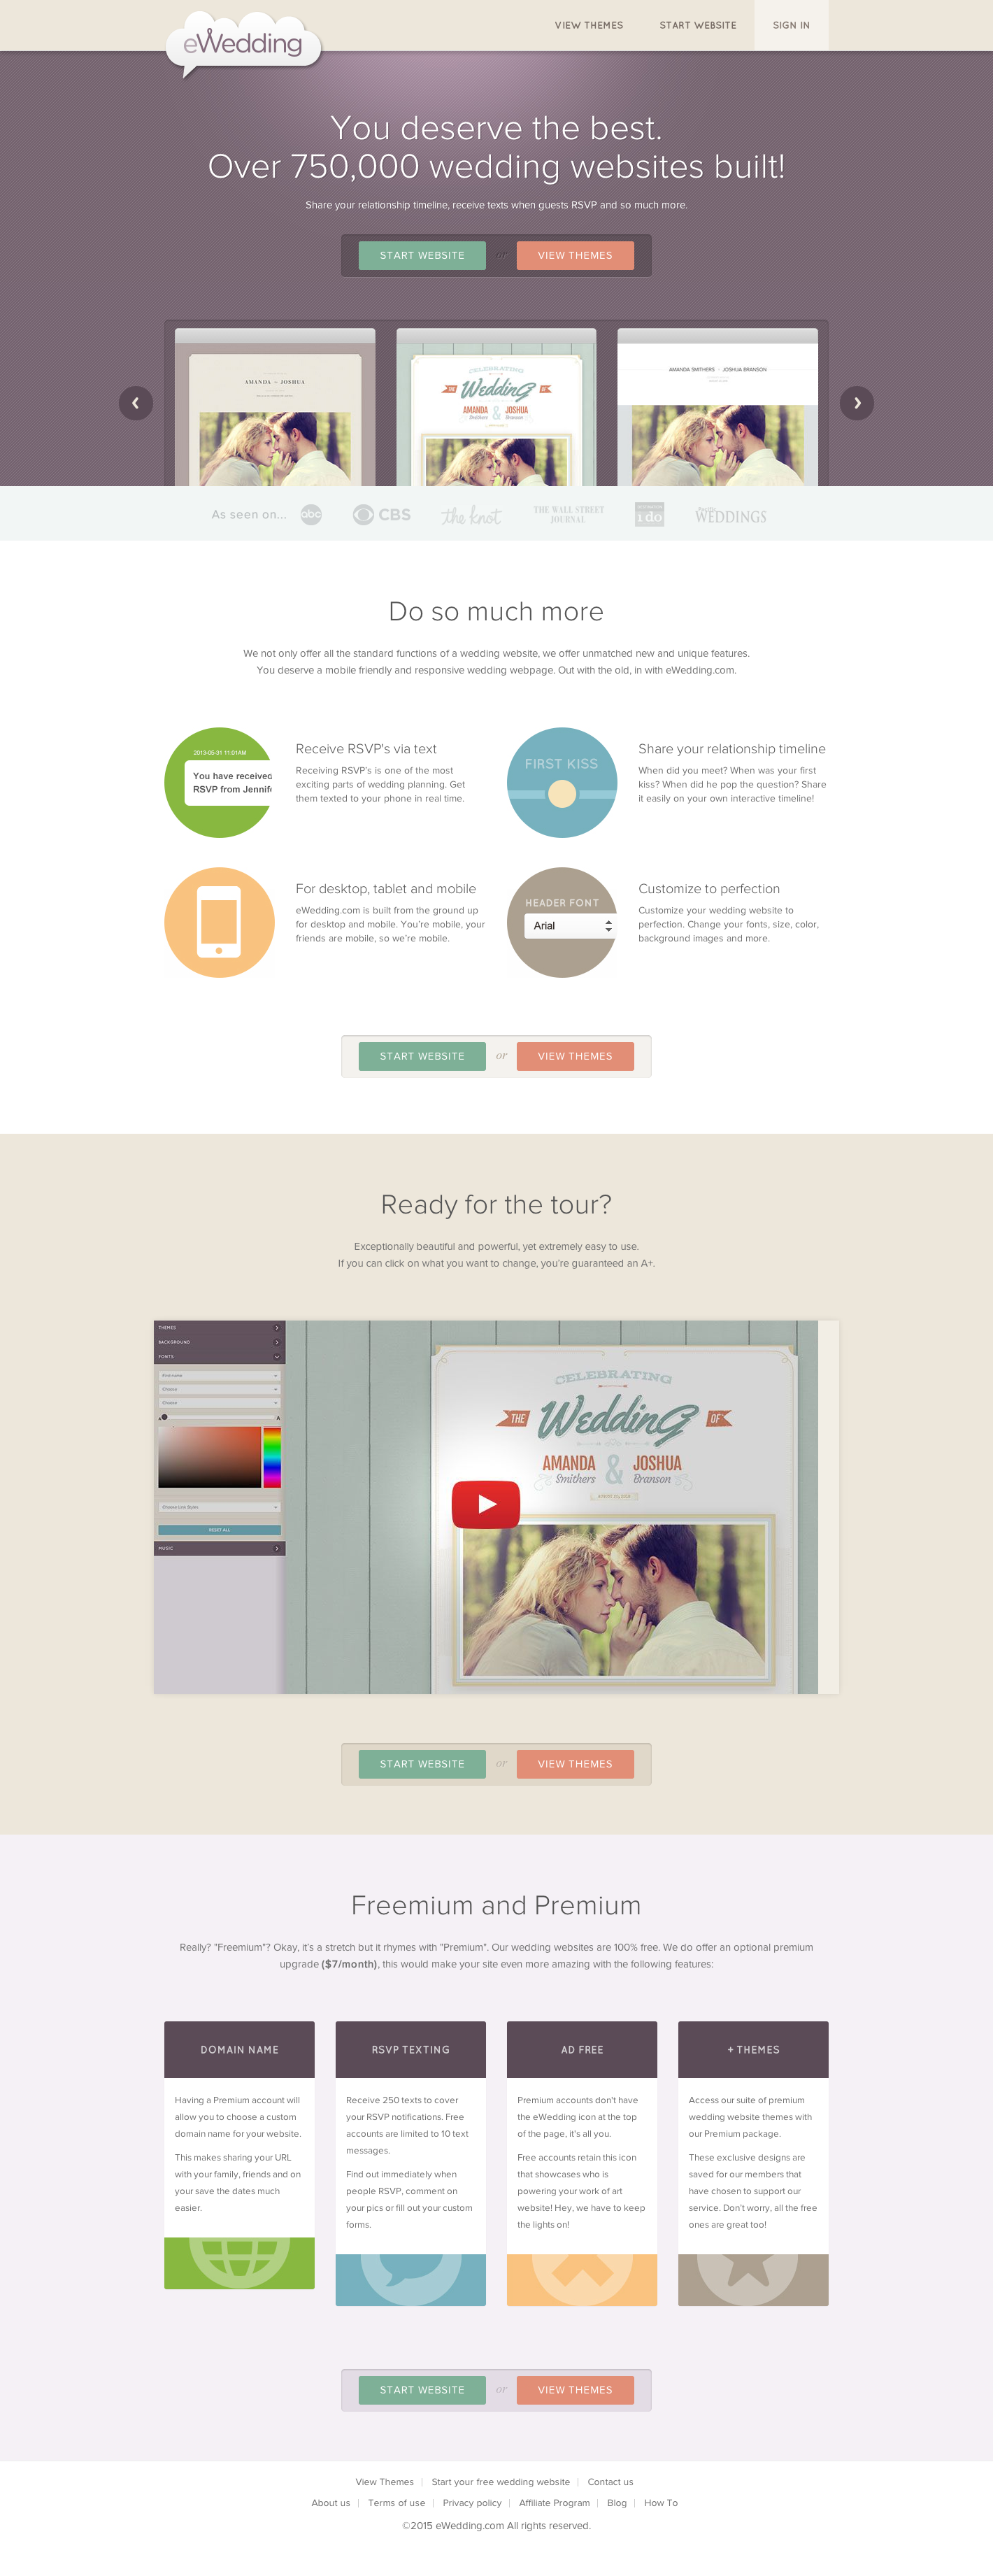 15 Examples Of Brilliant Website Homepage Design